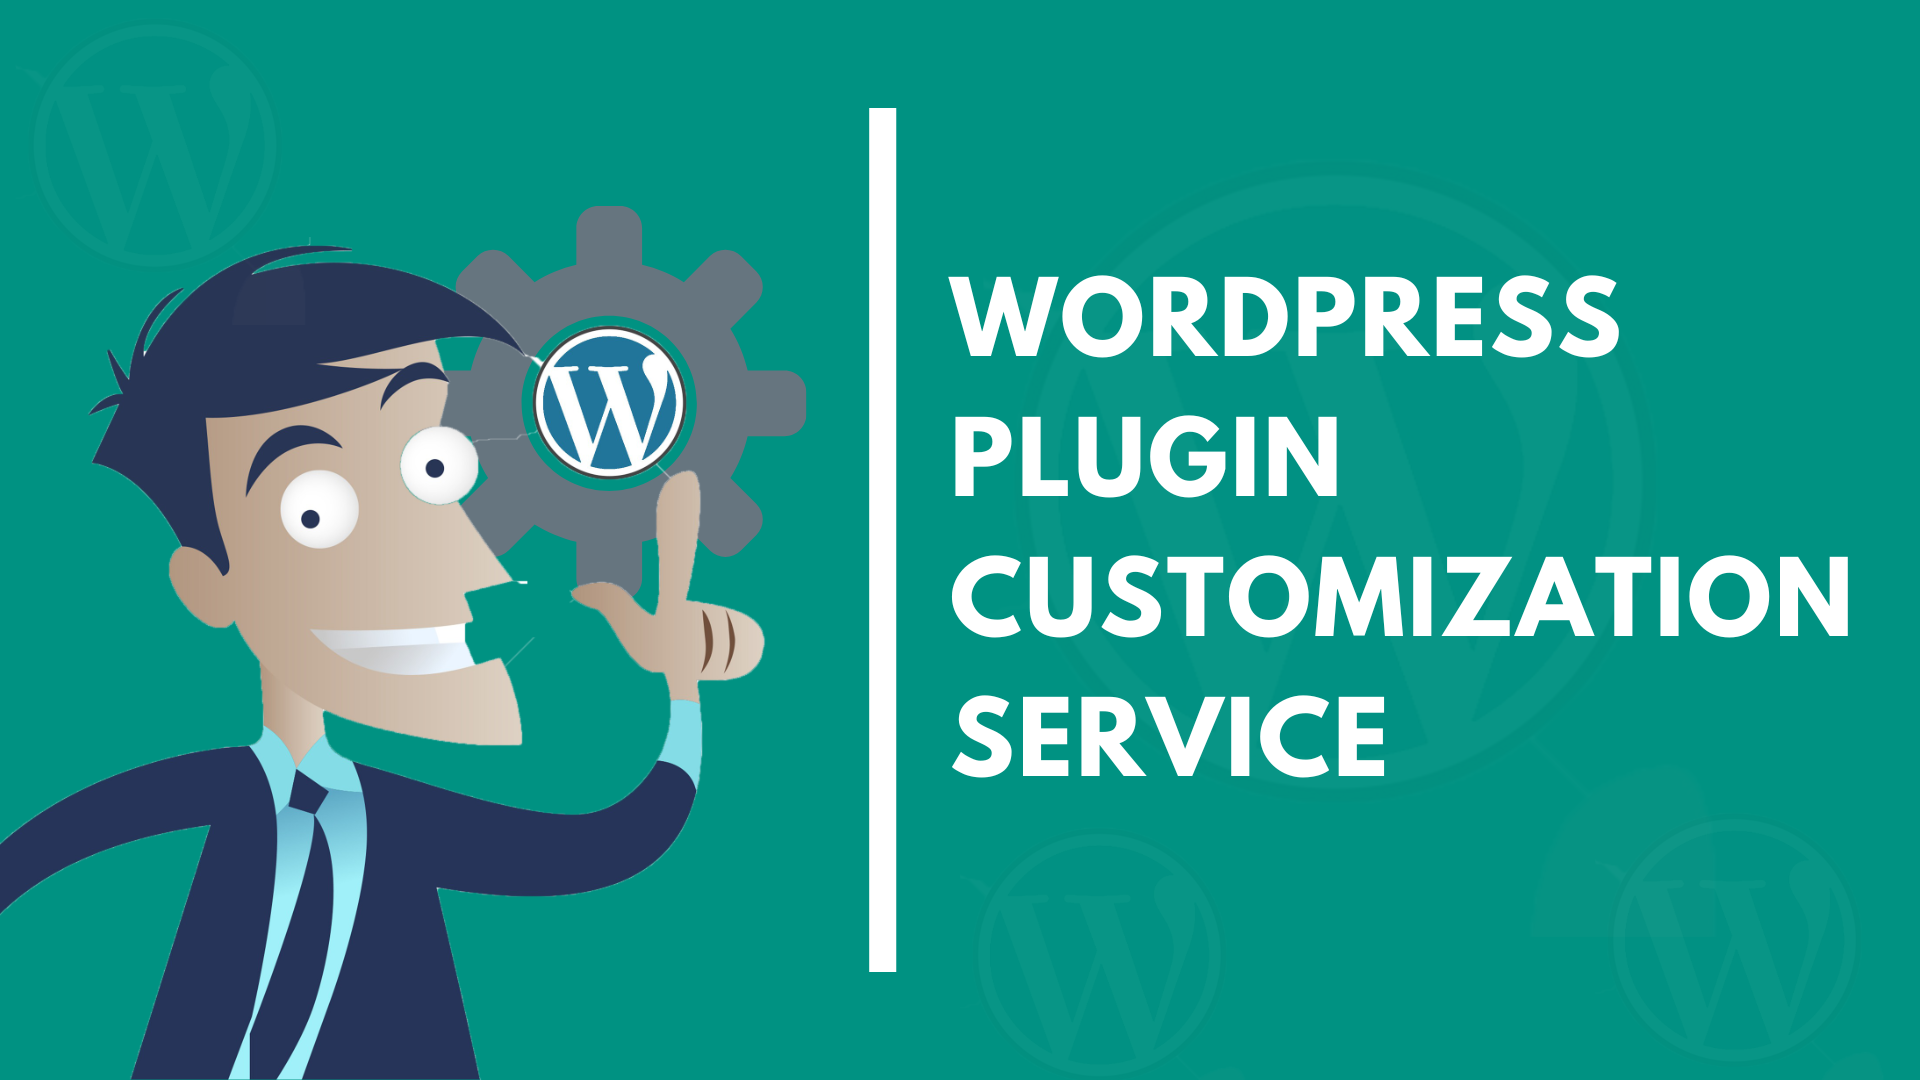 Are you looking for WordPress Plugin Customization Service?